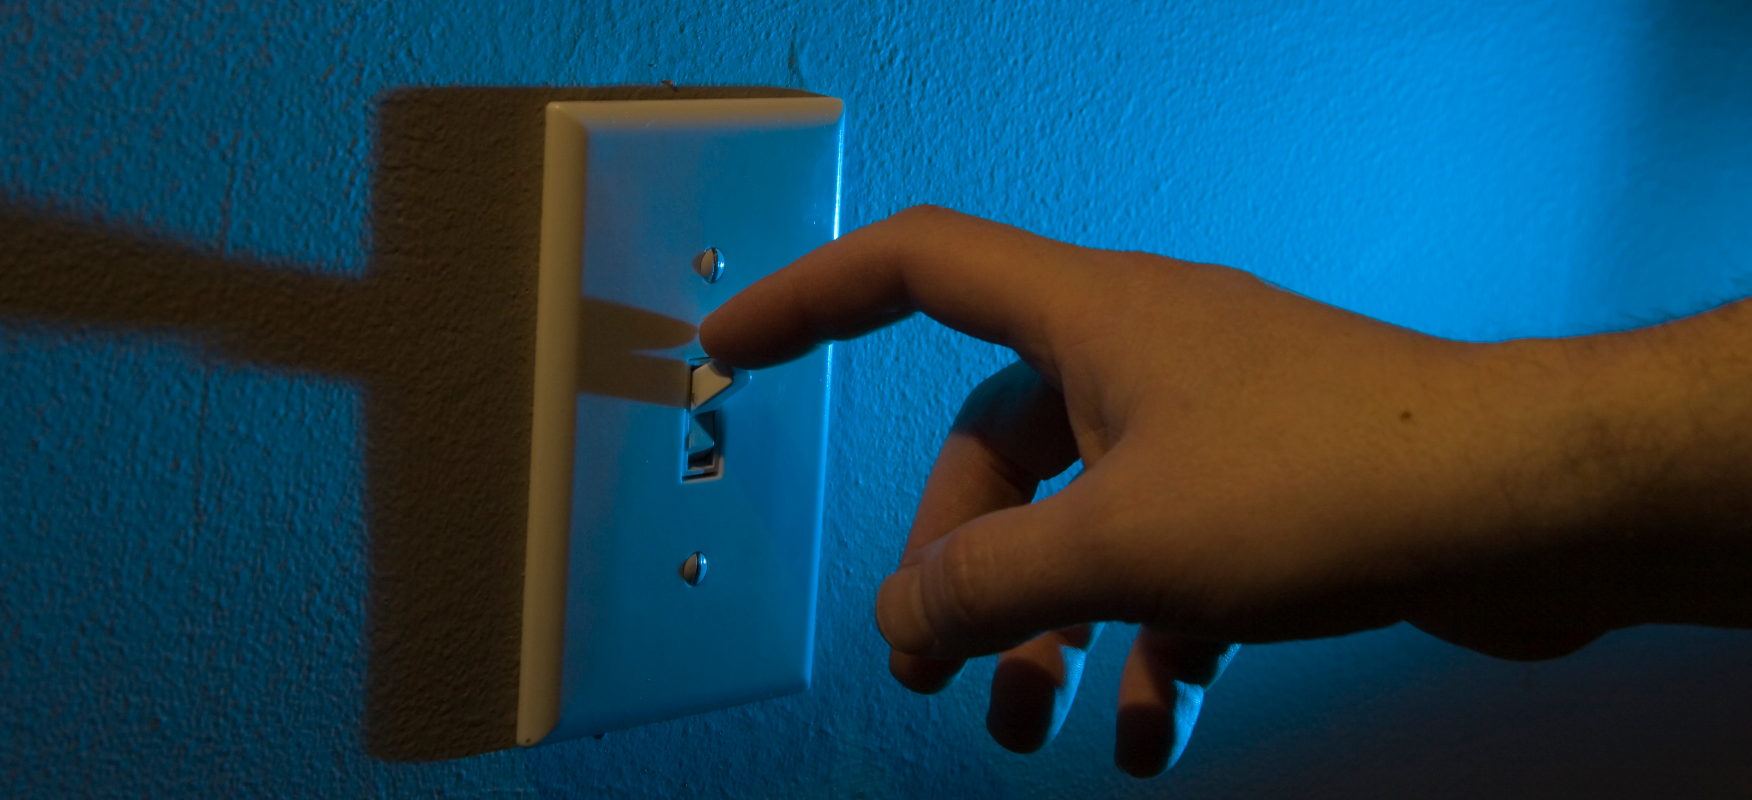 Landlord turning off light switch, illustrating utility shutoff laws in Ohio